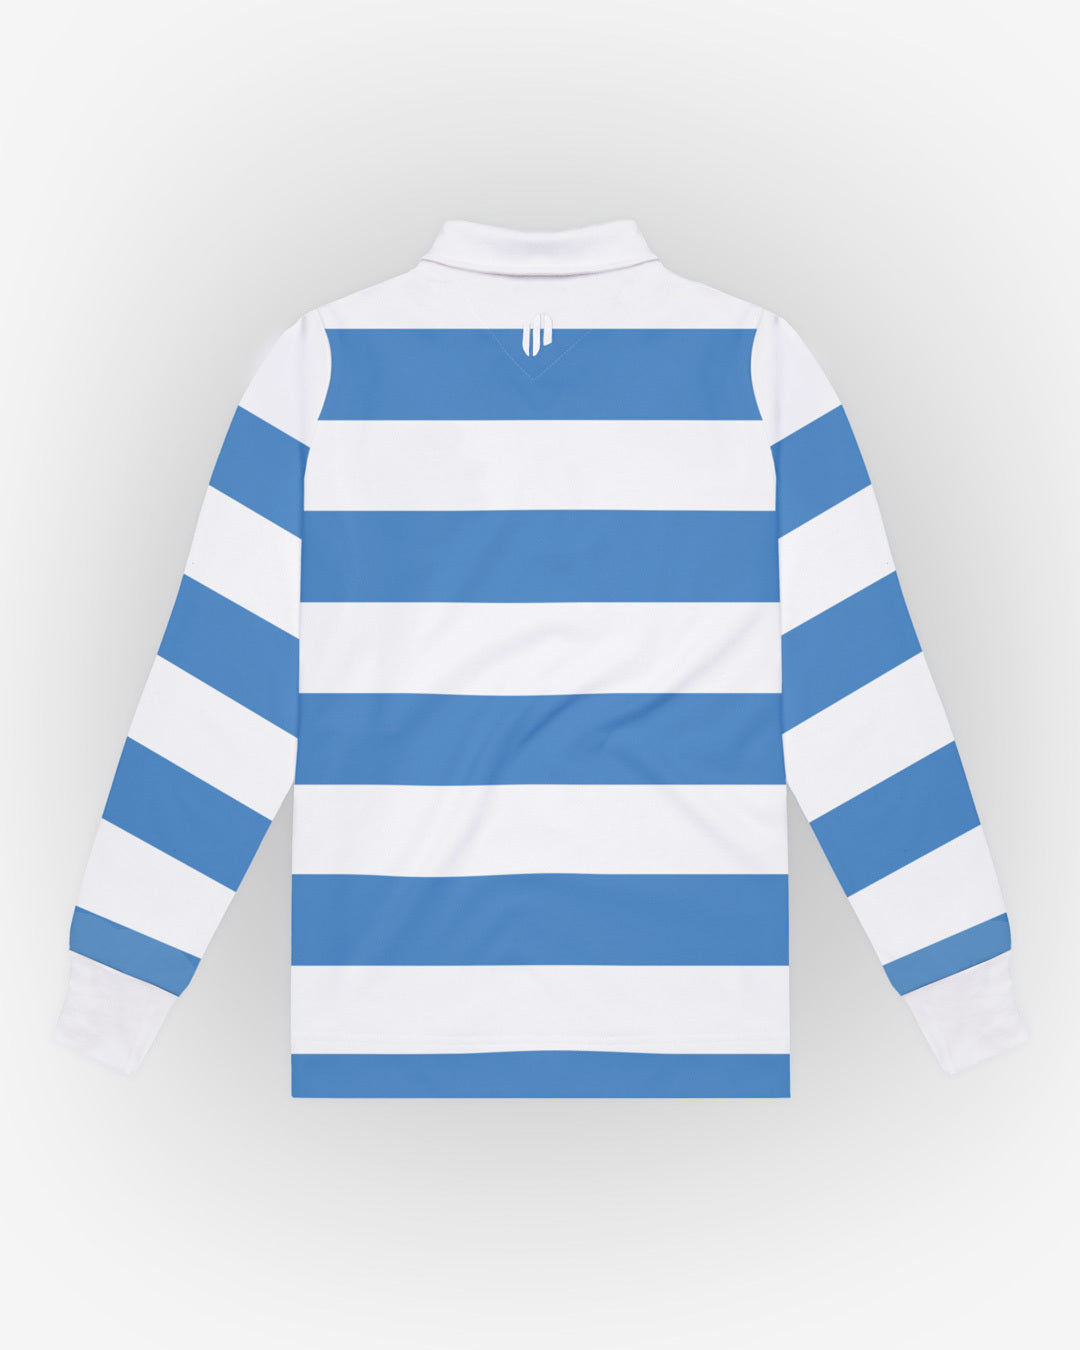 VC: ARG - Women's Vintage Rugby Shirt - Argentina